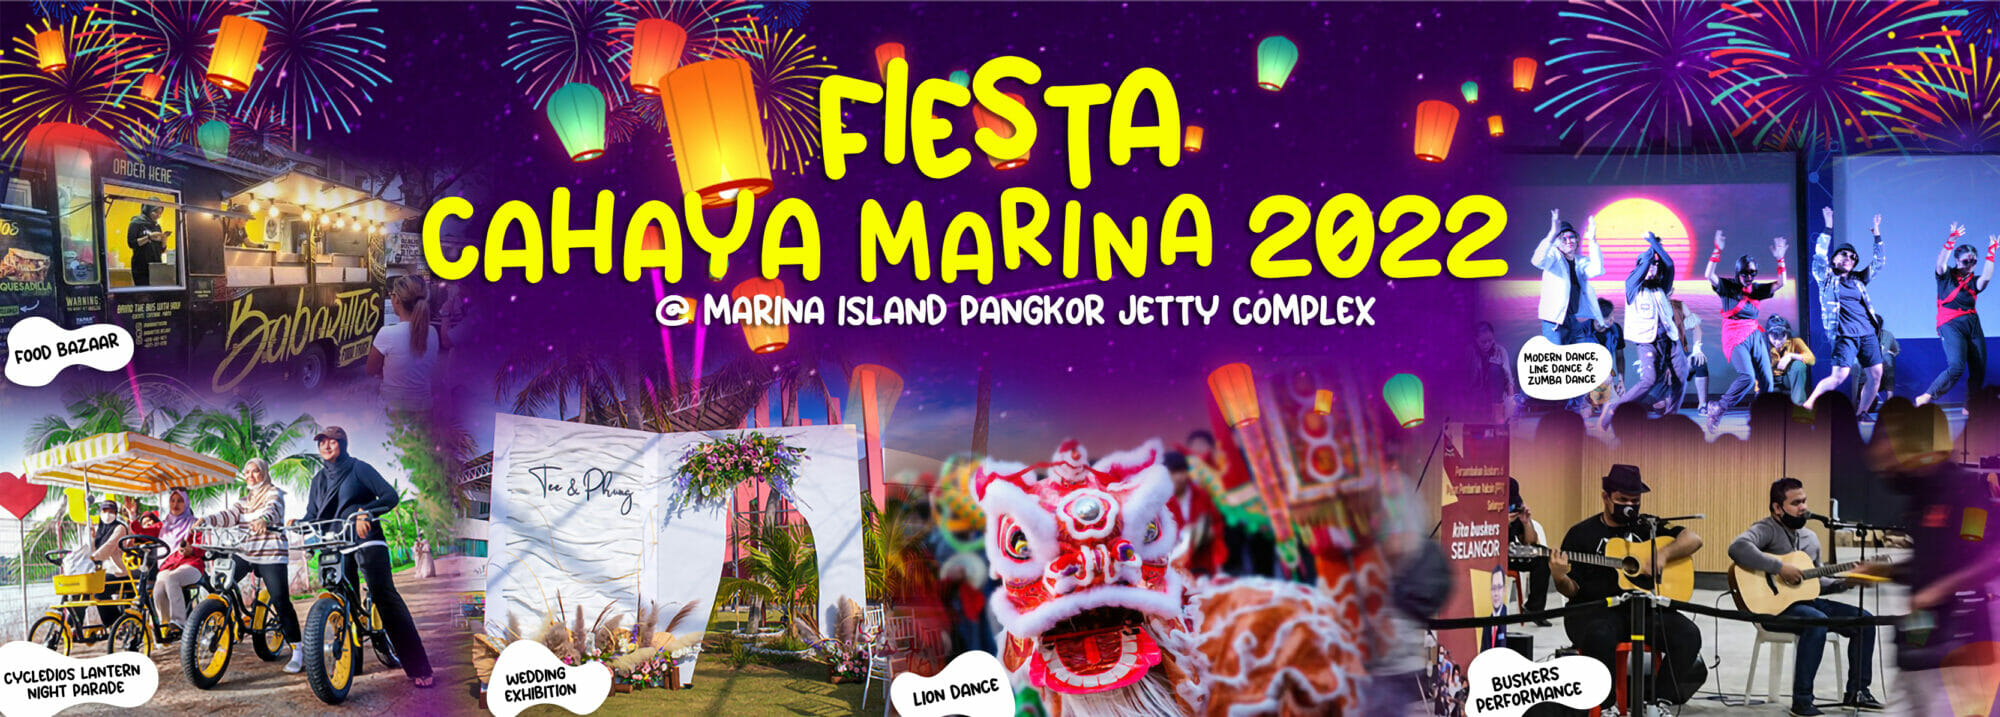 Fiesta Cahaya Marina 2022 (15 September 2022)